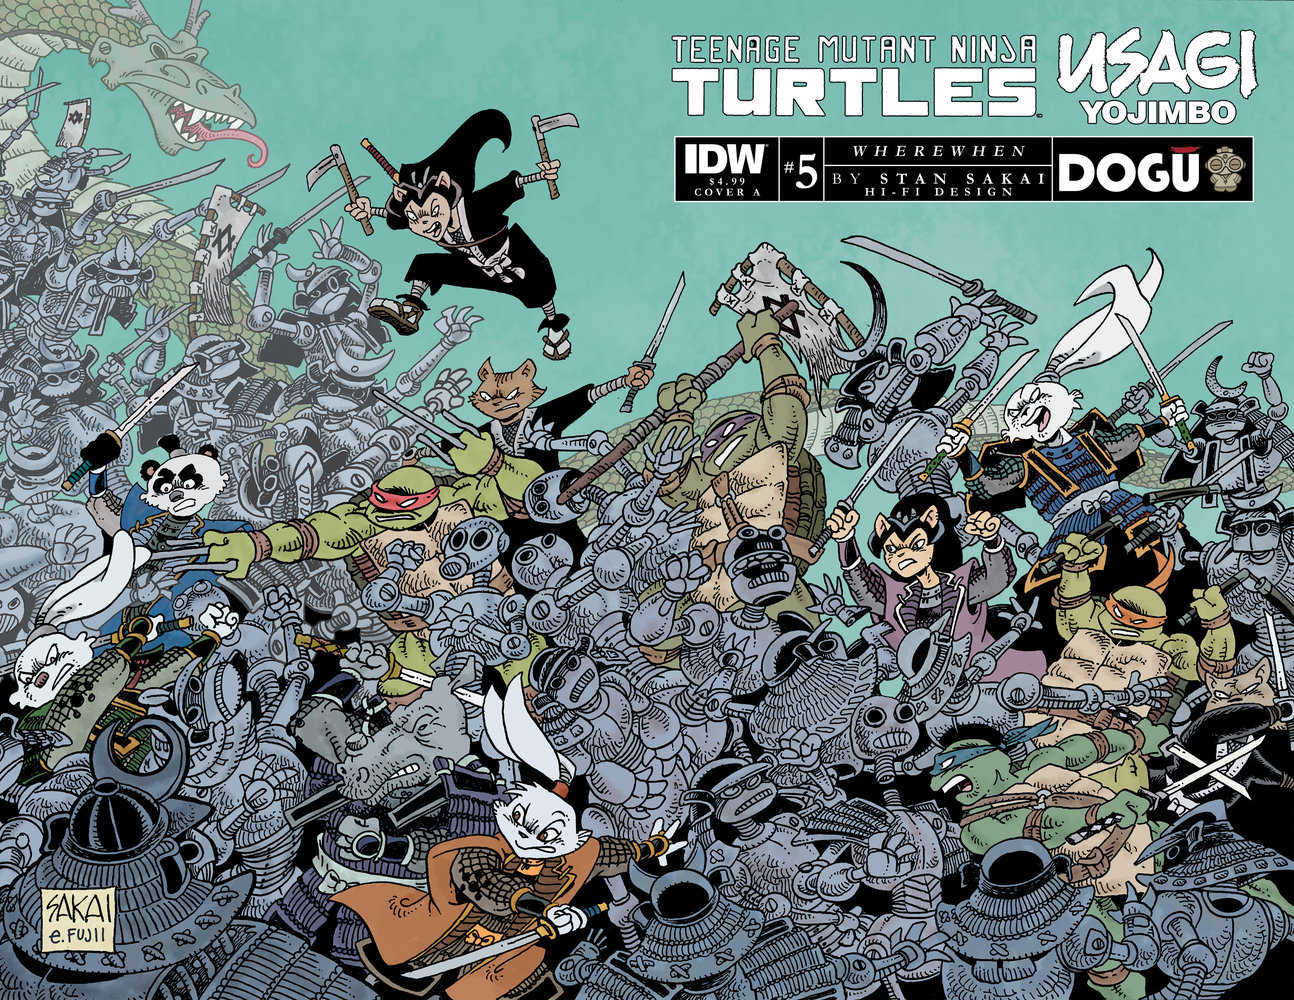 Teenage Mutant Ninja Turtles/Usagi Yojimbo: Wherewhen #5 Cover A (Sakai) - The Fourth Place